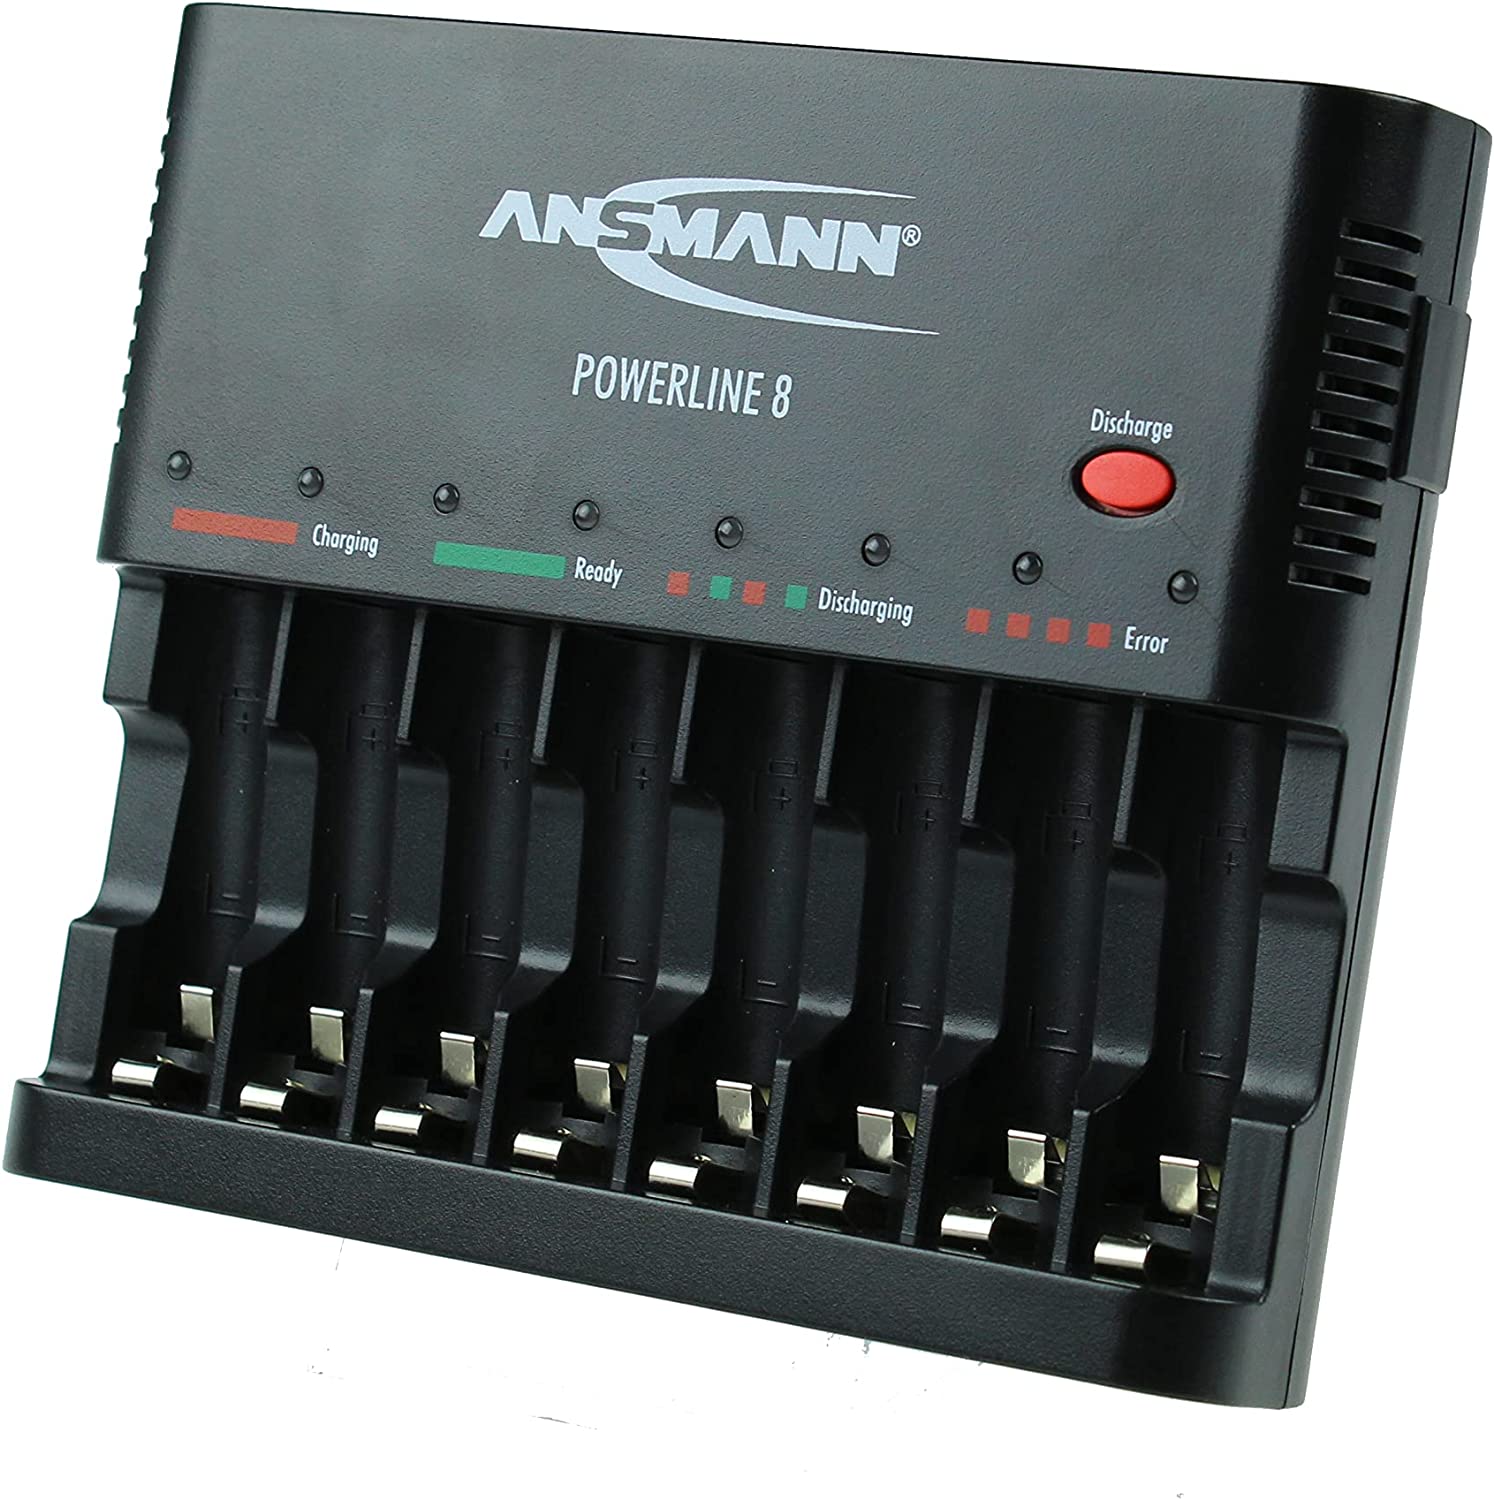 Ansmann Powerline 8